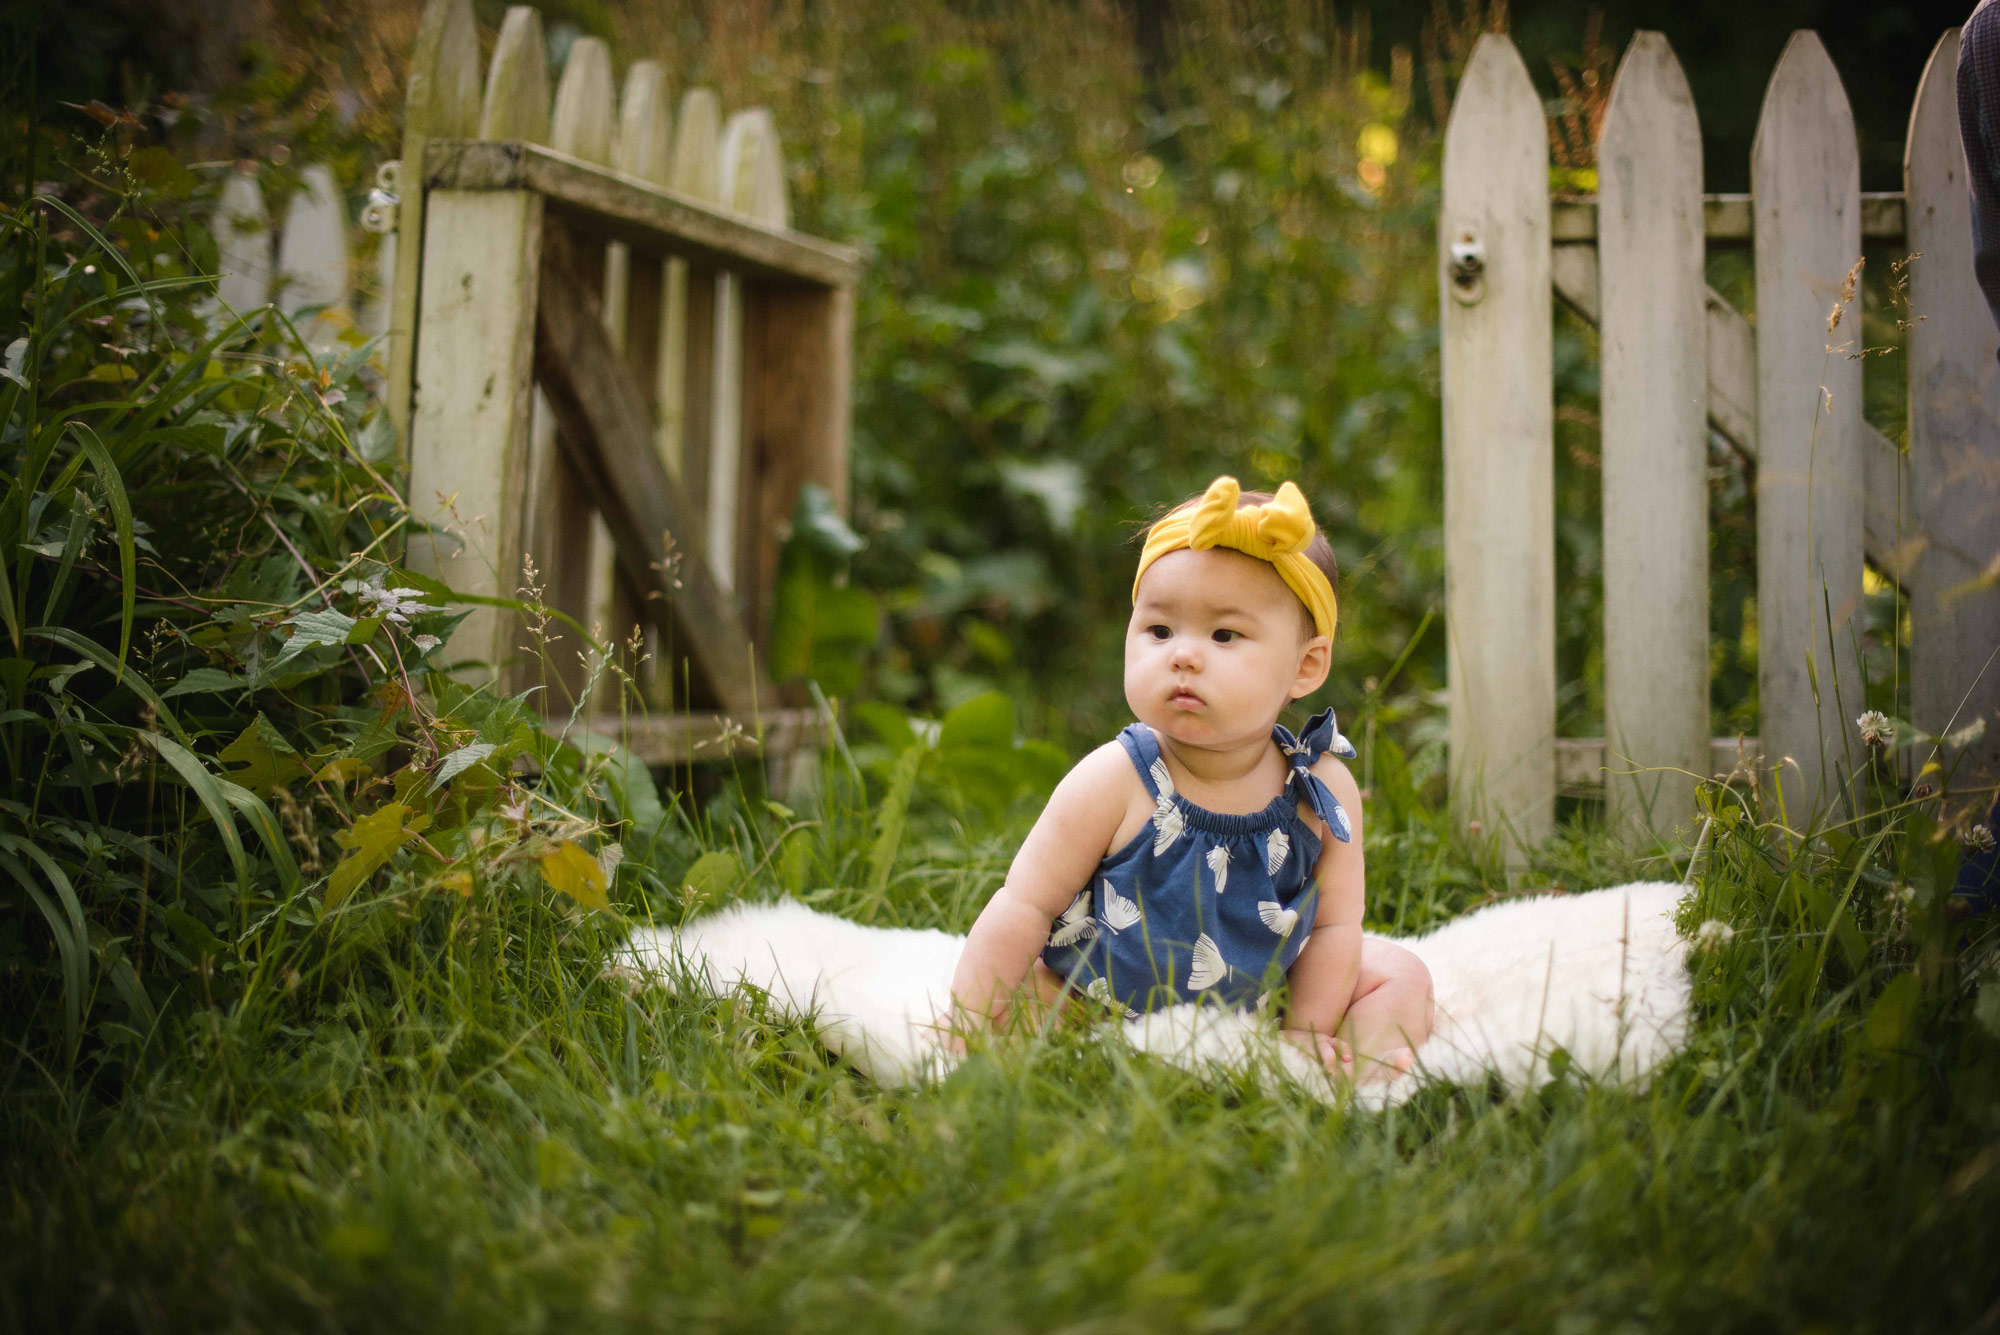 6 month old girl sitting up in garden in Wissahickon Creek park